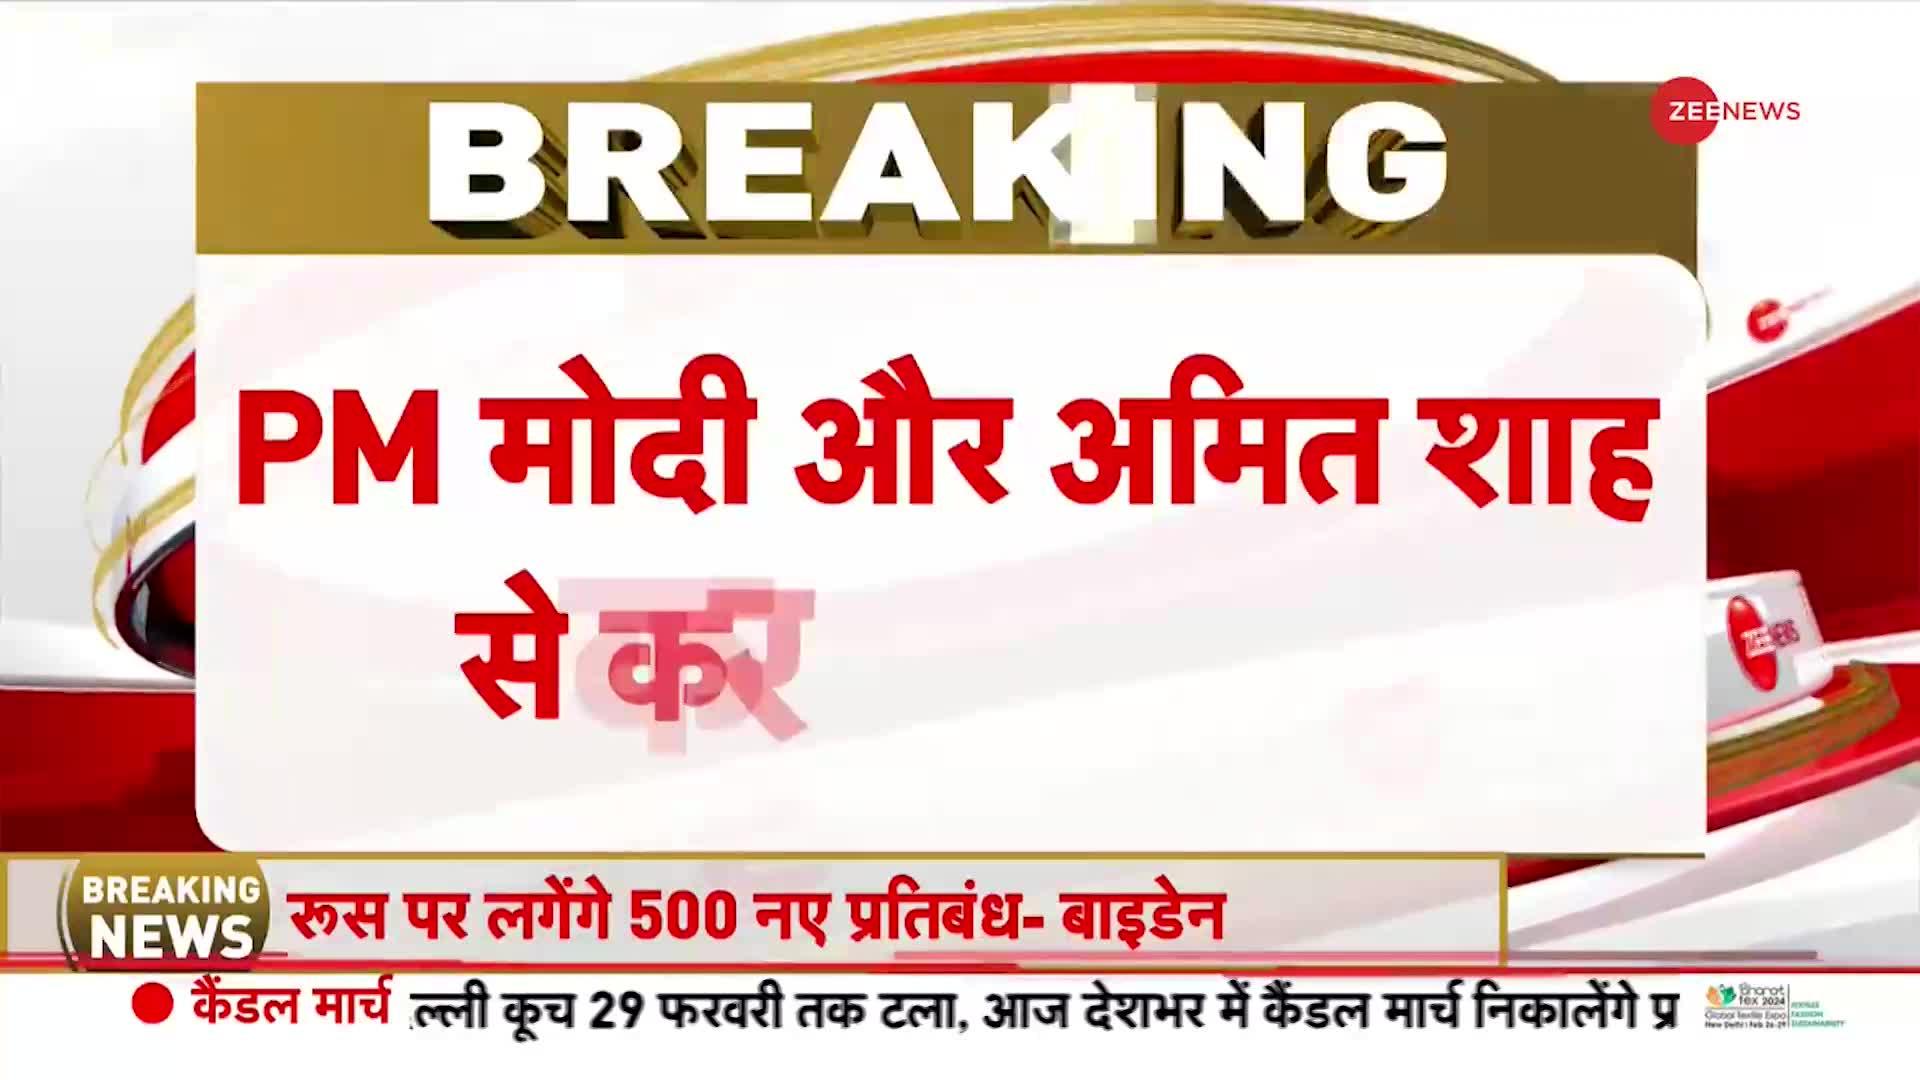 Breaking News: मुख्यमंत्री योगी आदित्यनाथ का आज दिल्ली दौरा, PM मोदी से हो सकती मुलाकात